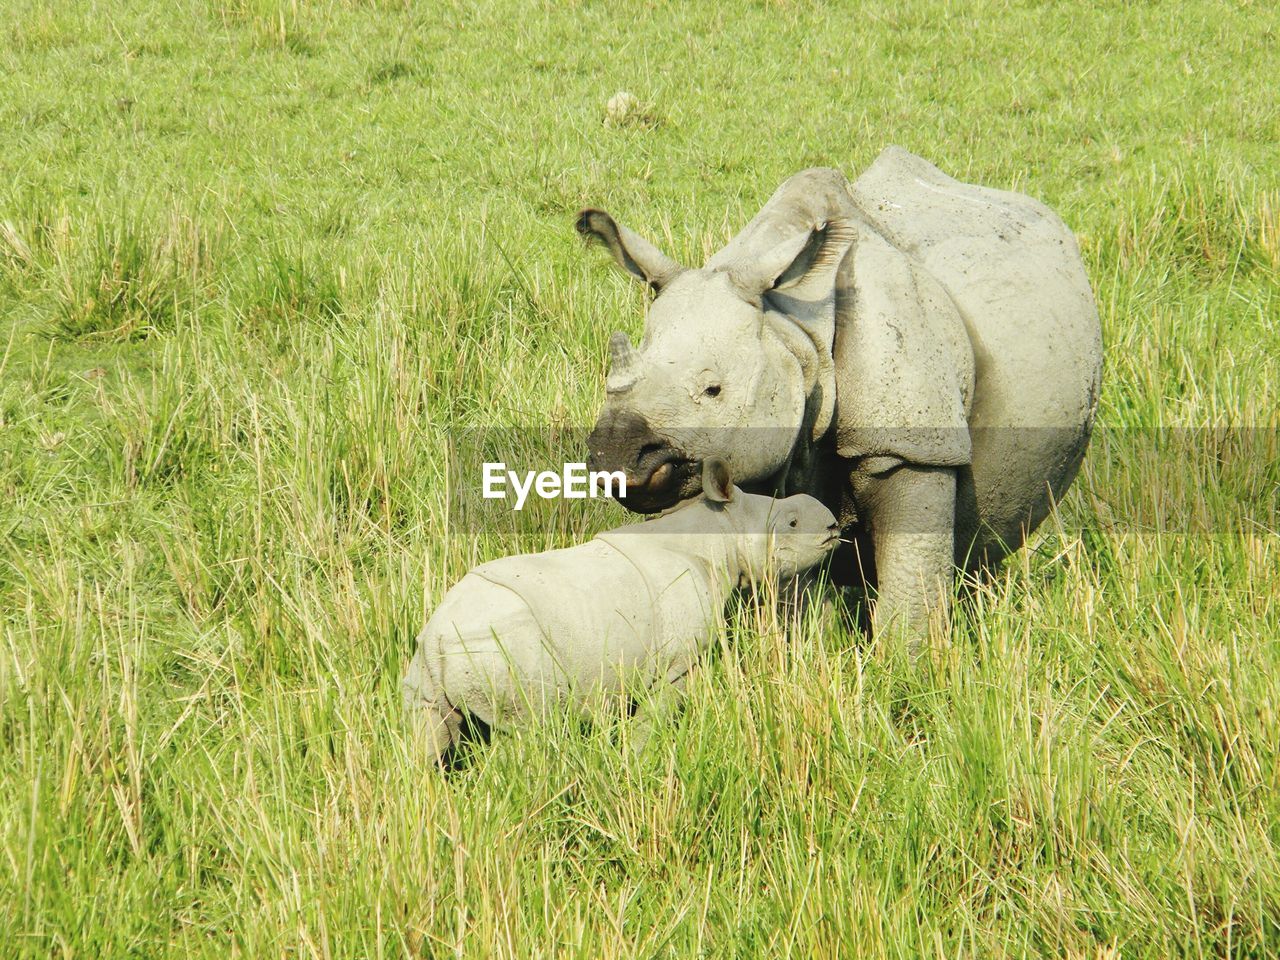 Rhinoceros with calf on grassy field